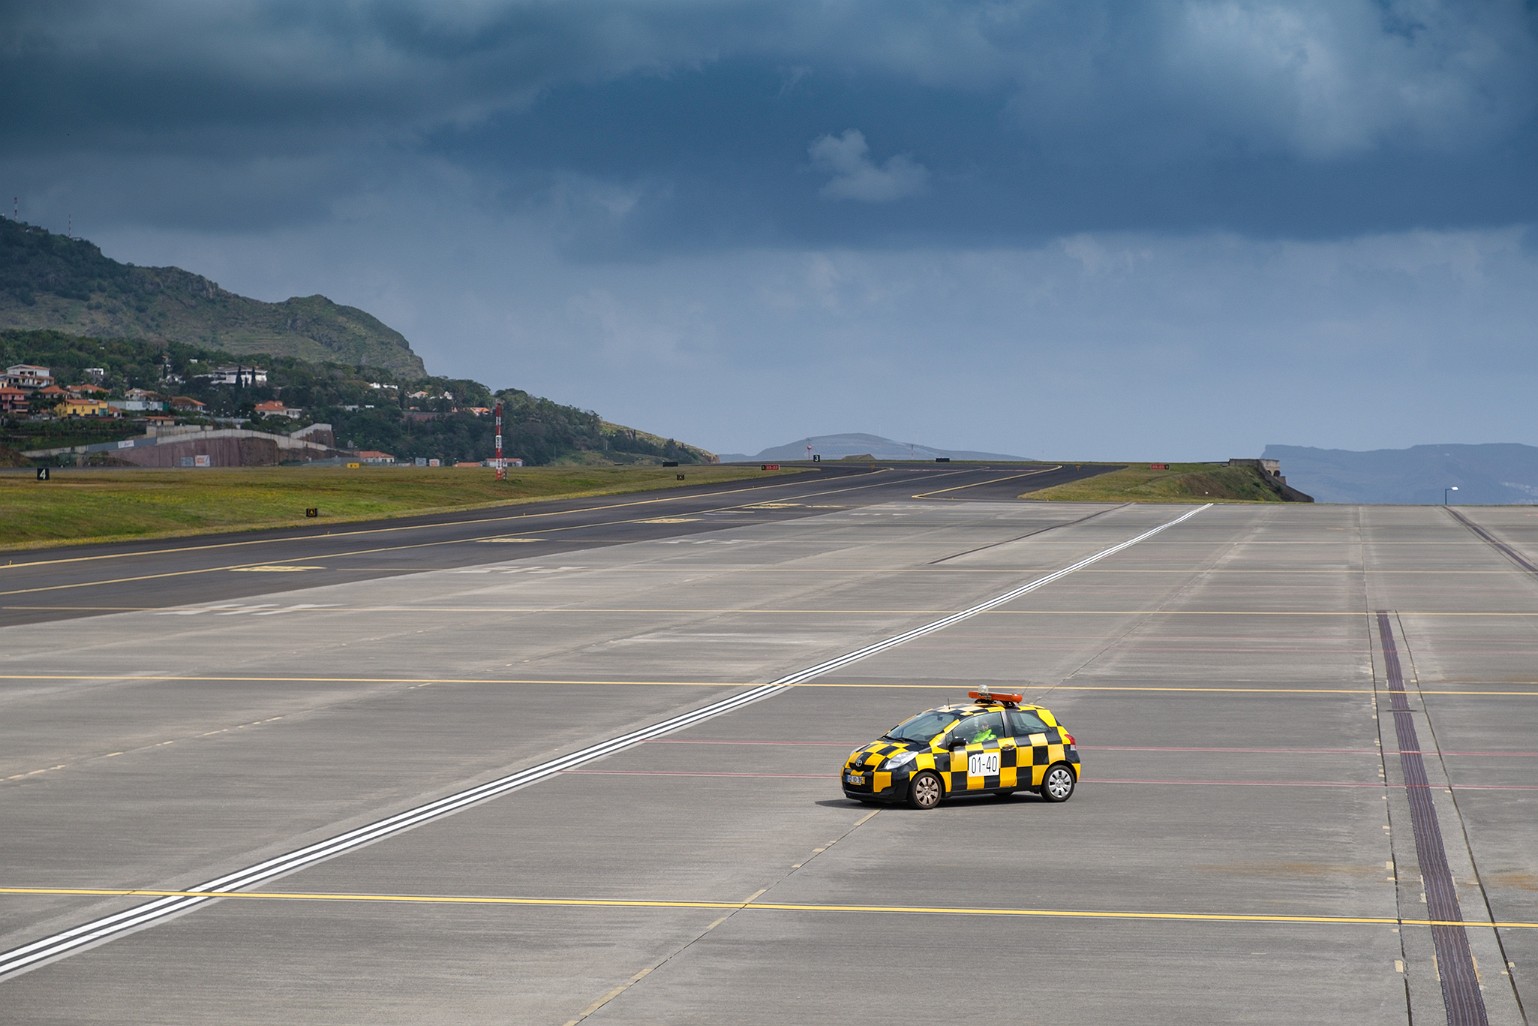 Madeira_0256_Flughafen_X-T2_55mm_f6,4_800s_ISO200_LR69_sRGB_web